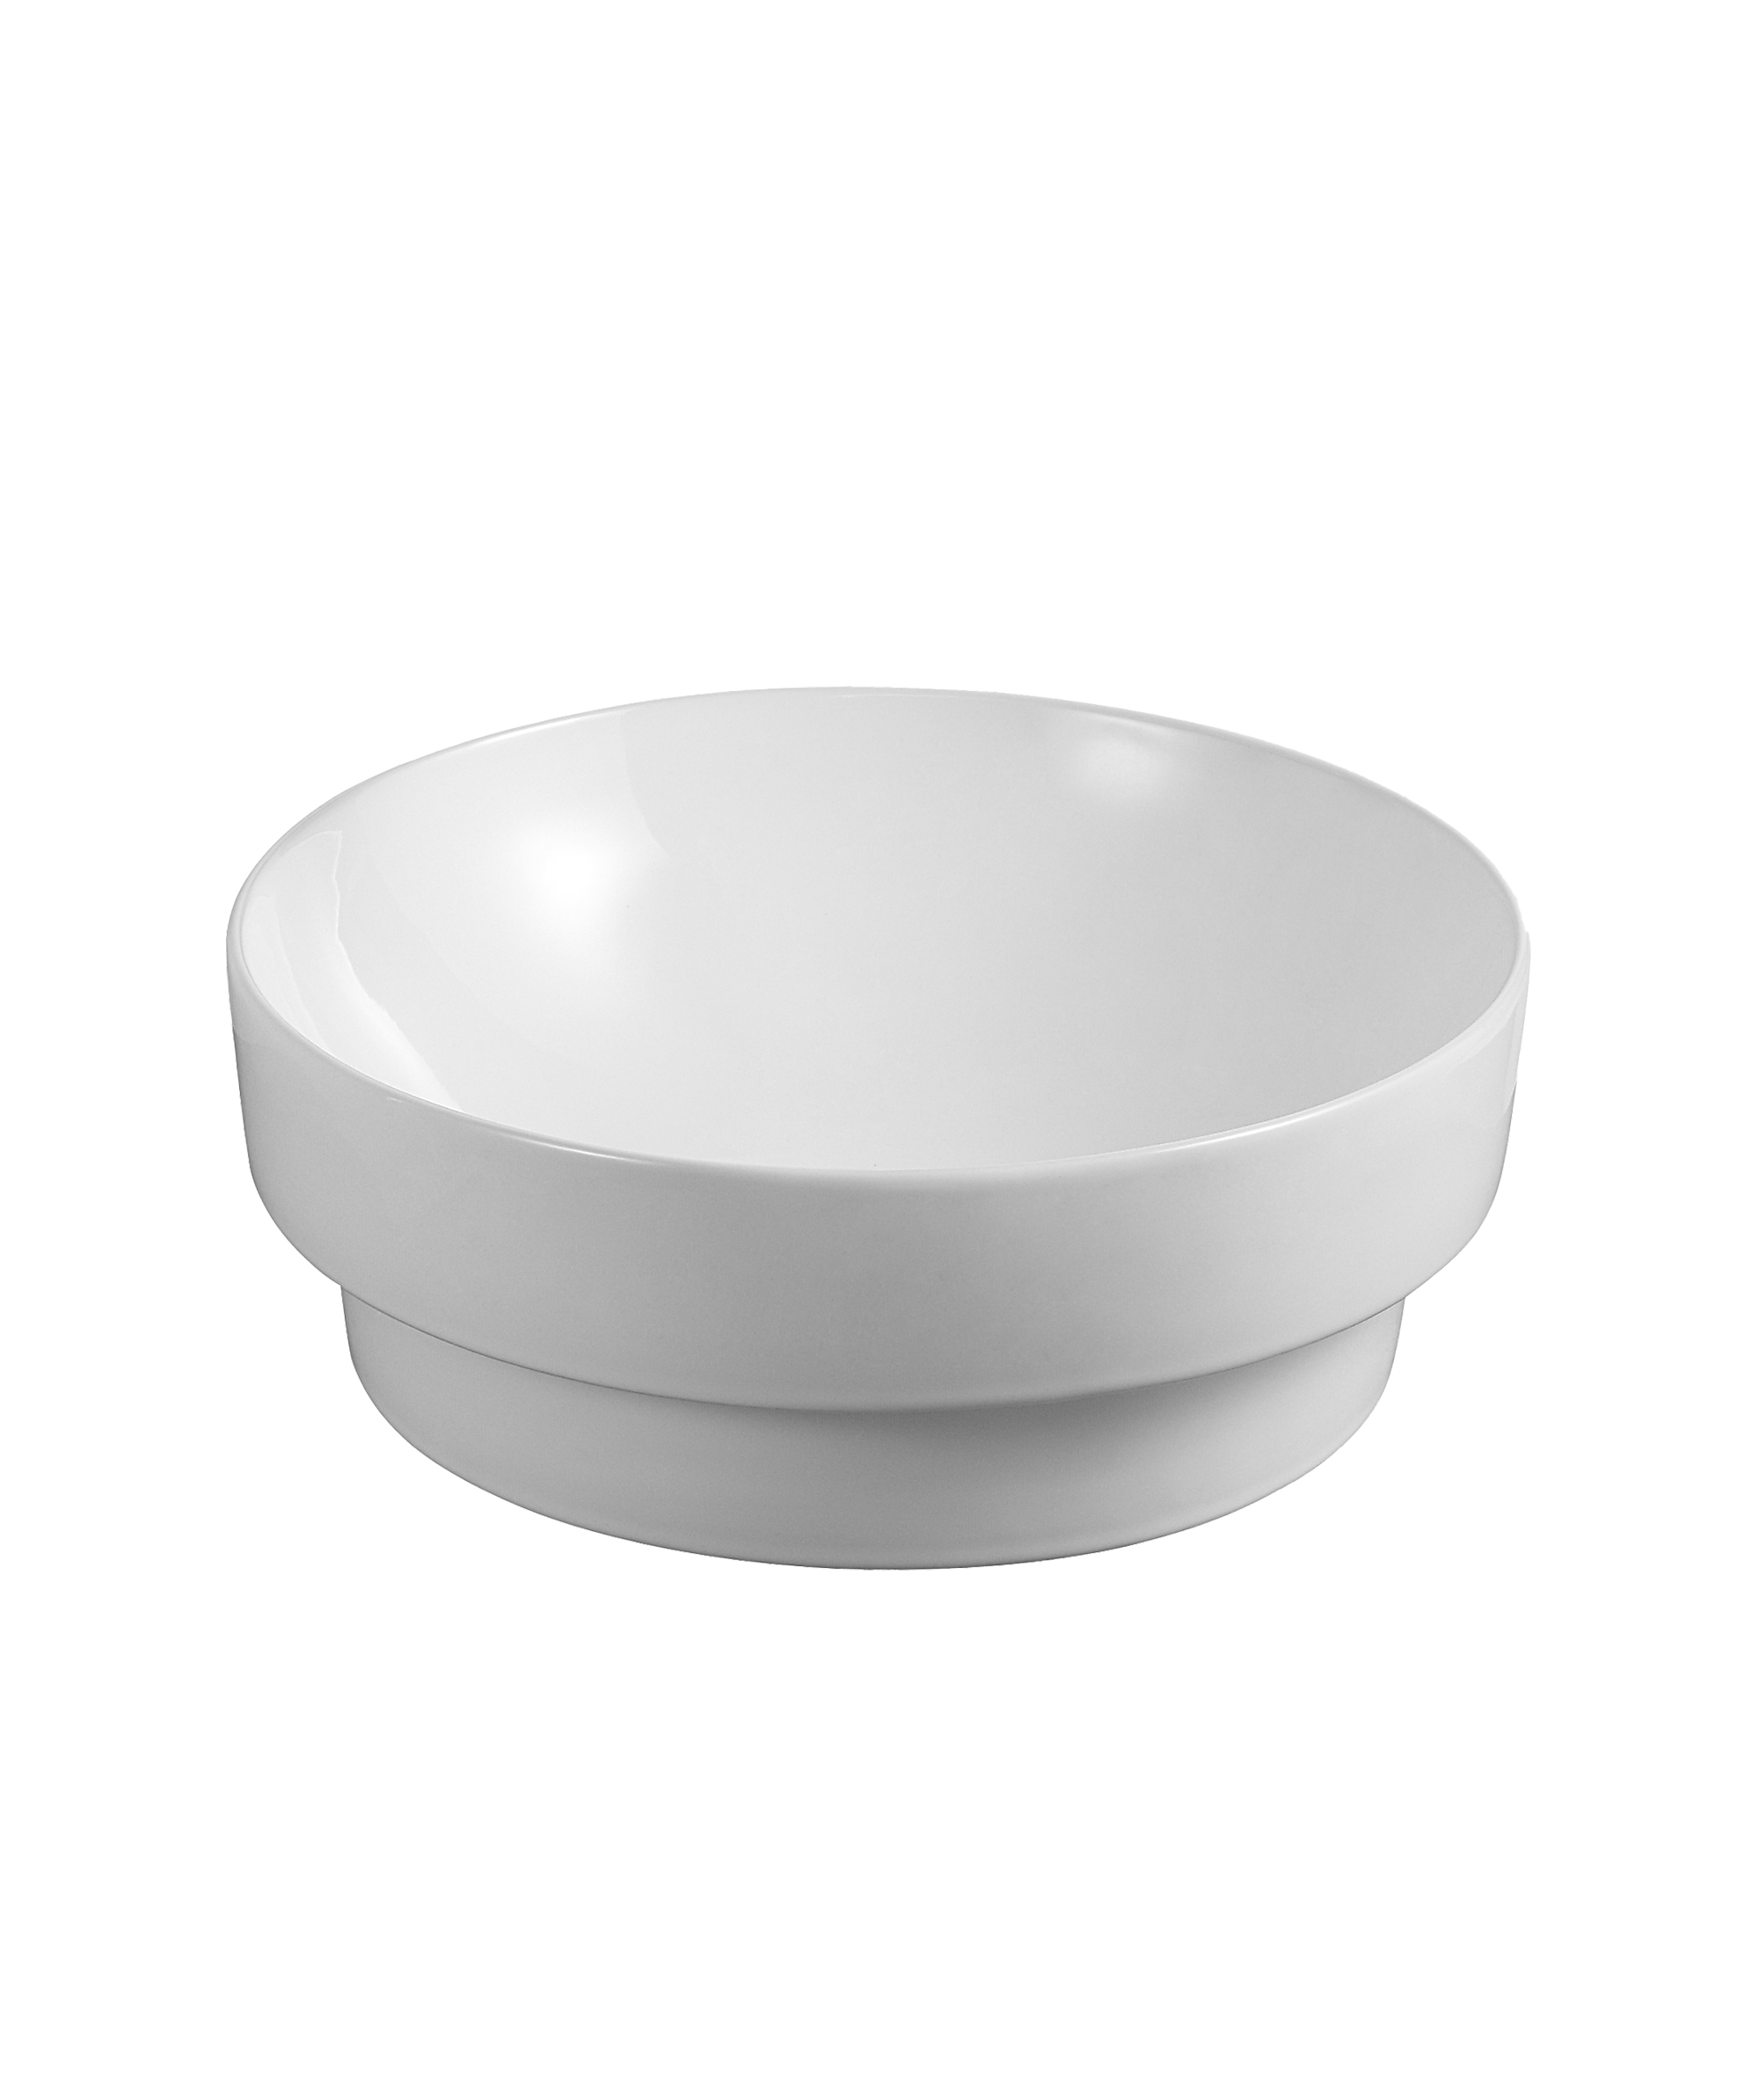 Obello 370 ceramic basin